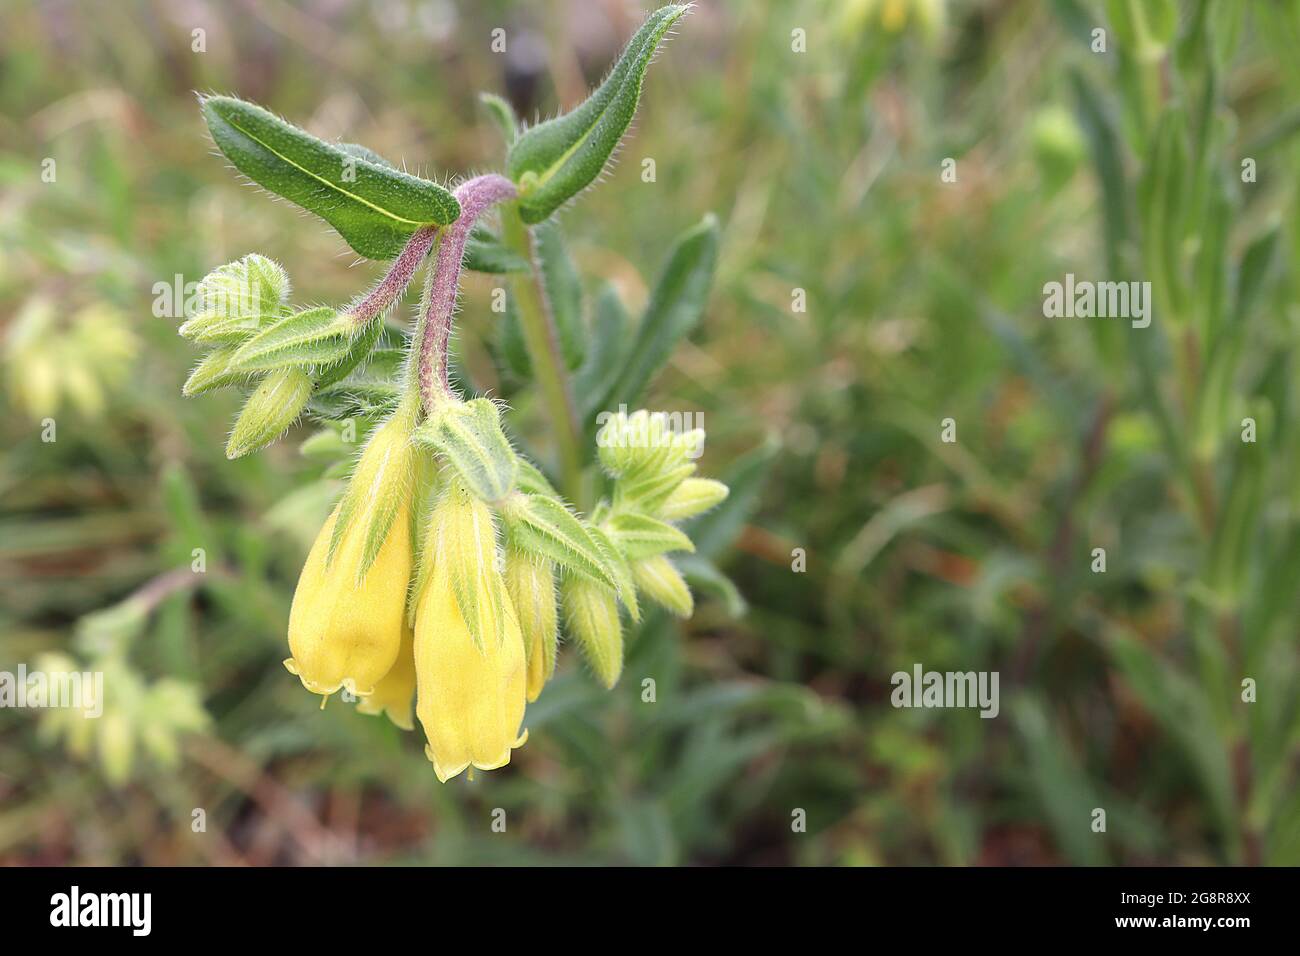 Onosma frutescens stielte Haufen langer hängender, glockenförmiger gelber Blüten mit langen, behaarten Kelchblättern, Mai, England, Großbritannien Stockfoto